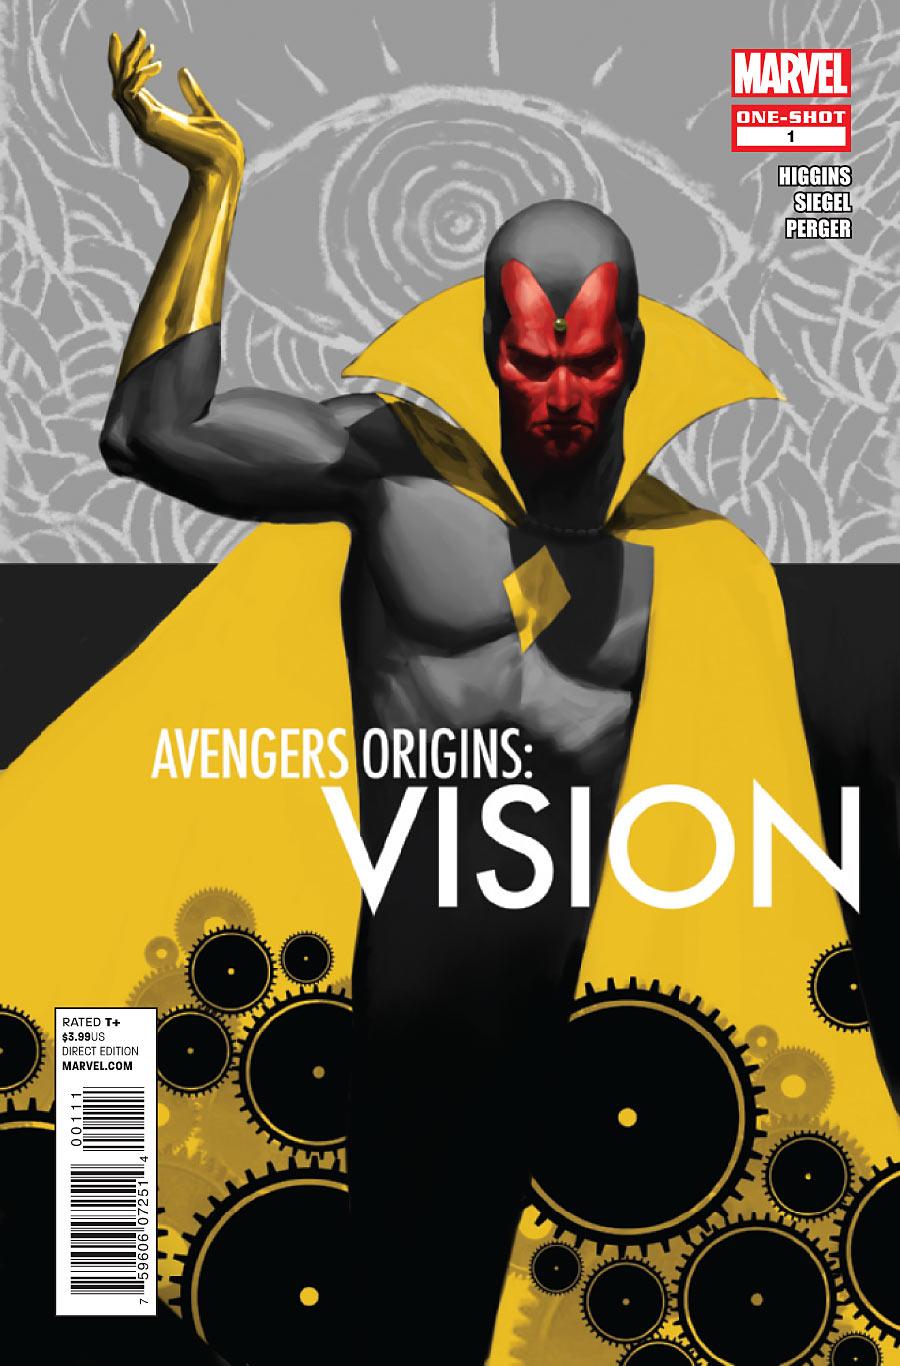 Avengers Origins: Vision Vol. 1 #1